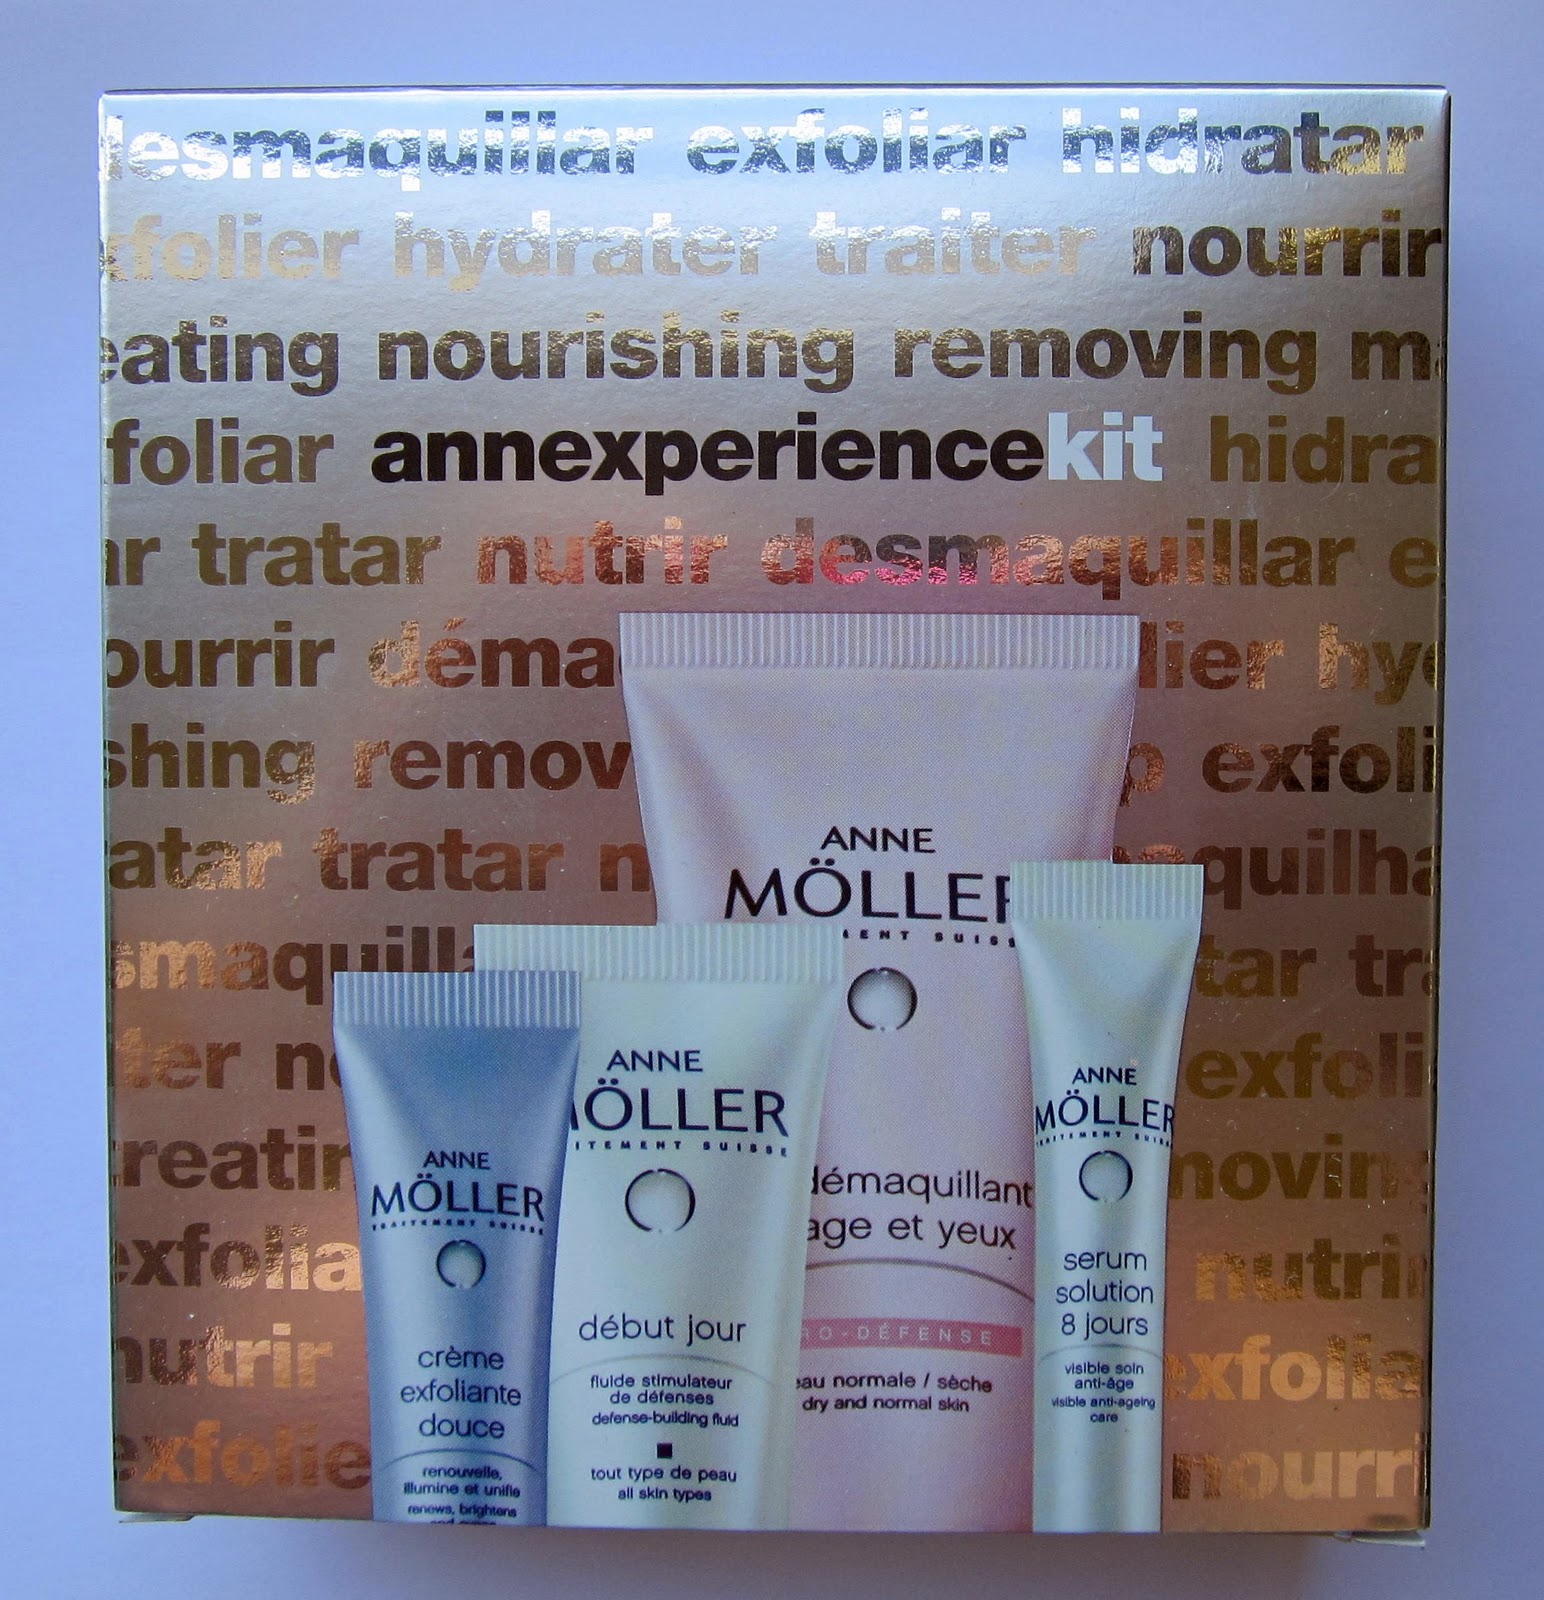 Kit de tratamiento Annexperience de Anne Möller